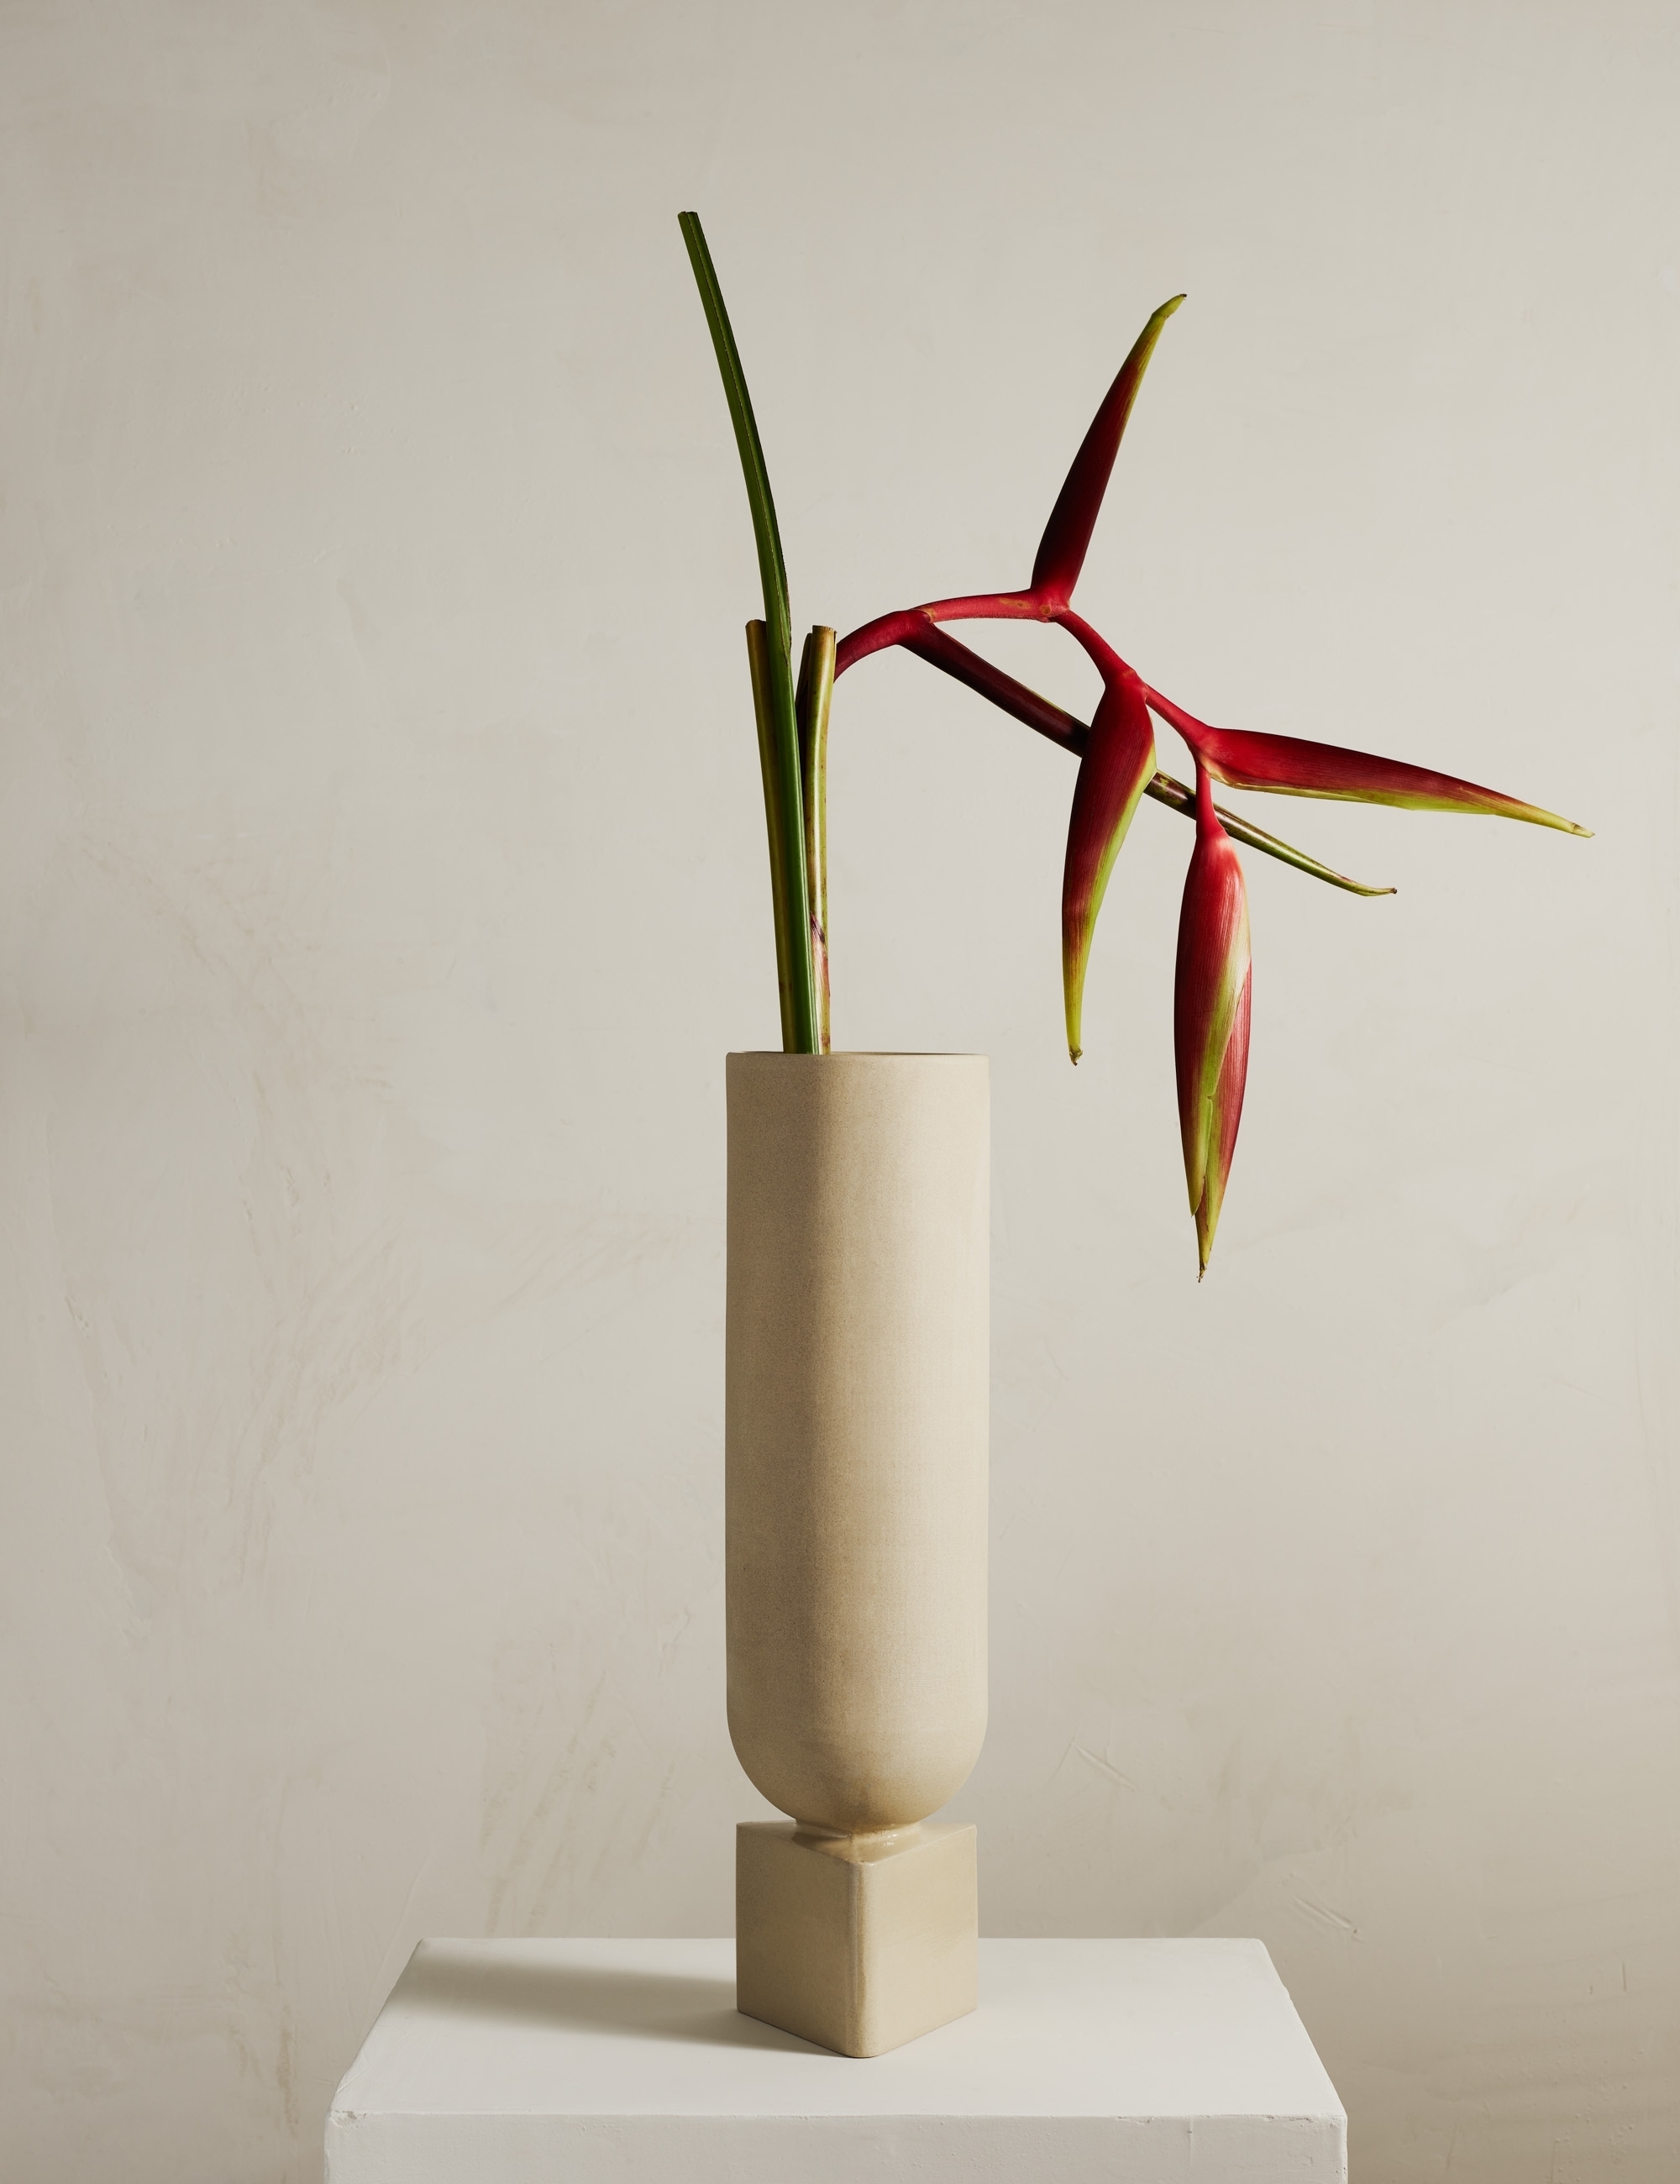 Tava Decorative Vase by Light + Ladder - Image 2